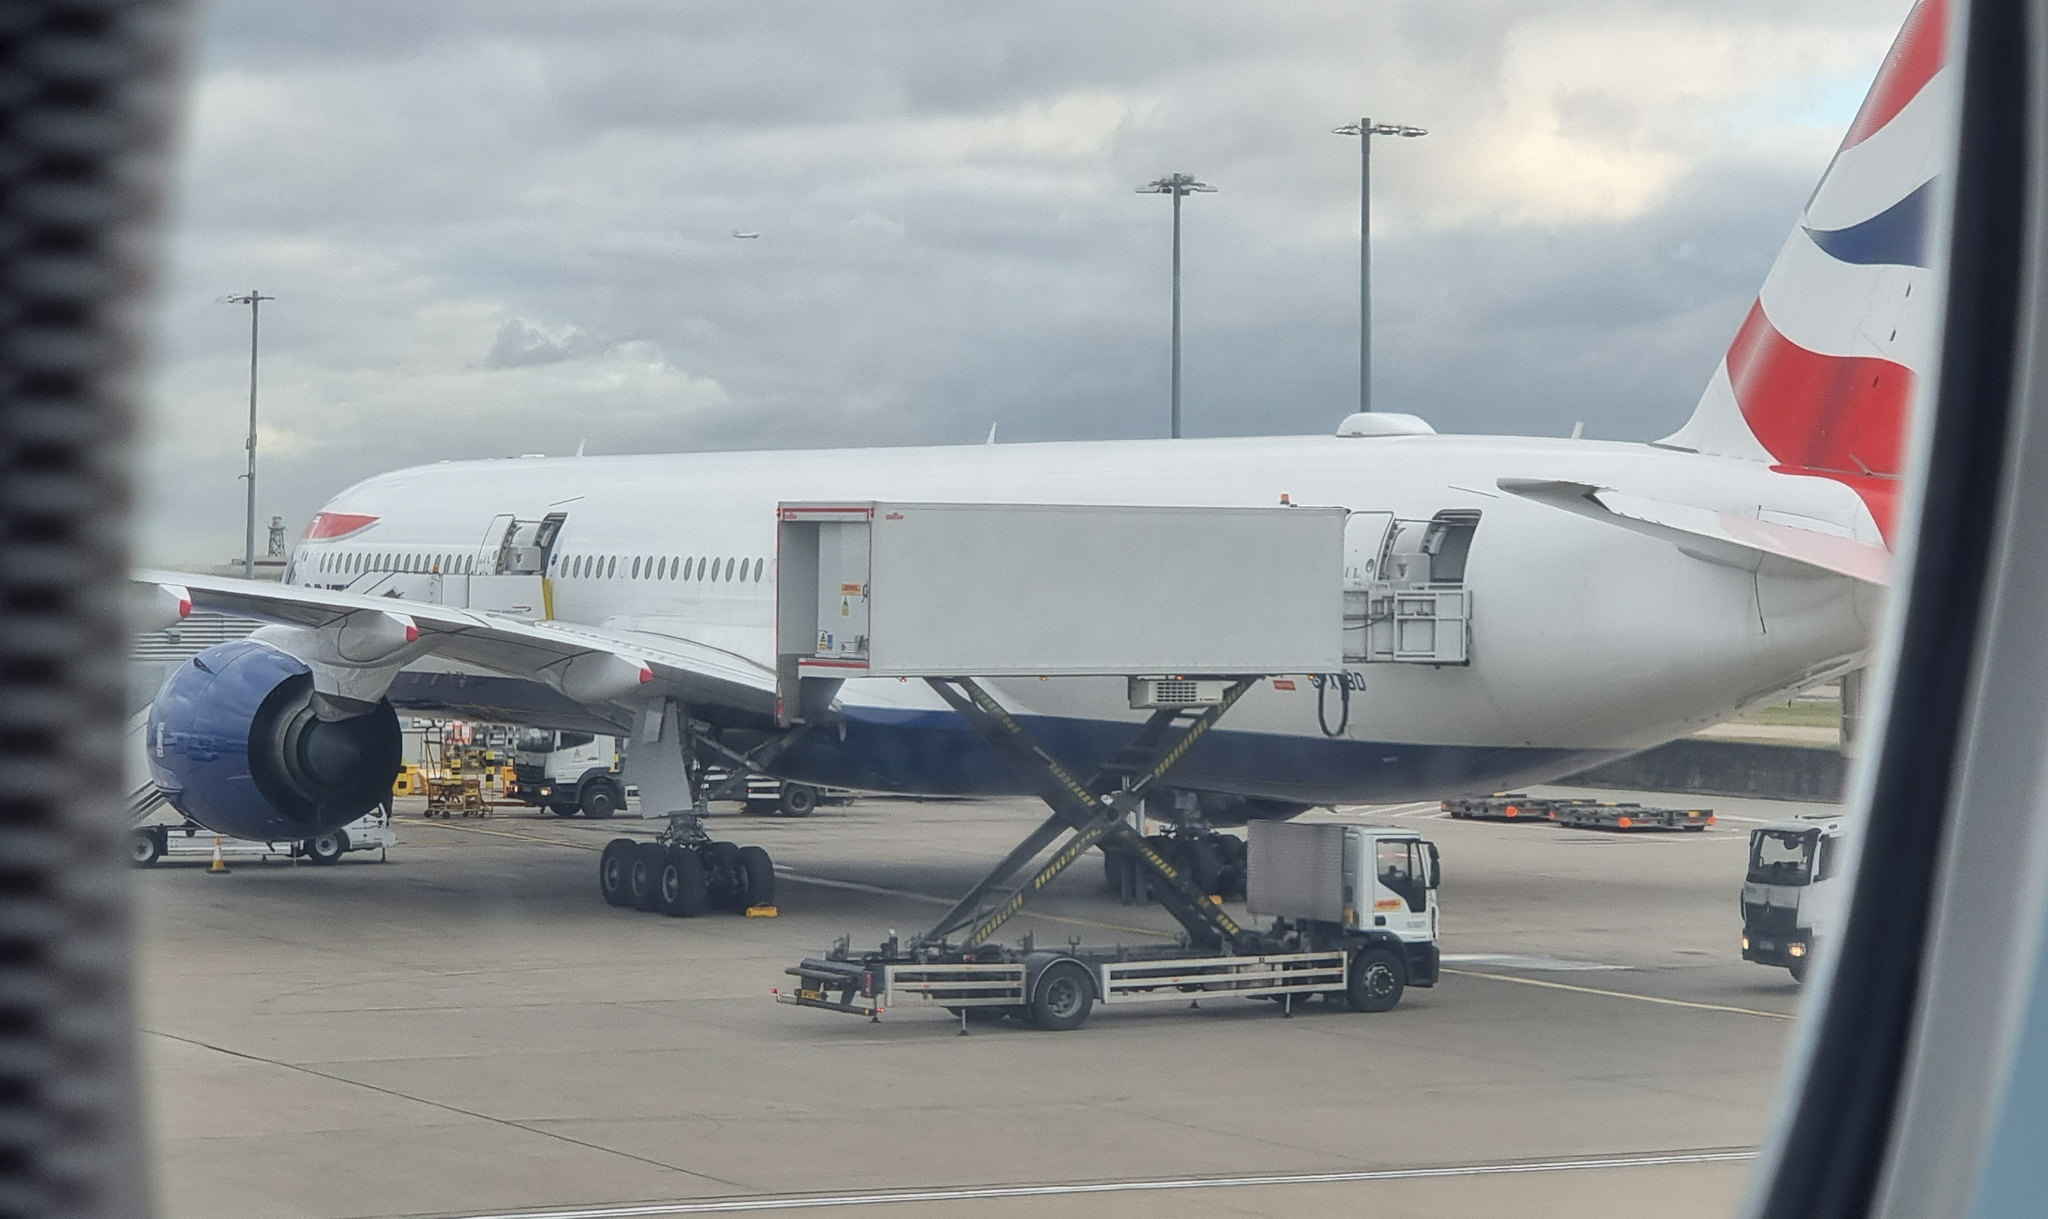 Another BA aircraft visible from BA115 taxiing to the runway at Heathrow